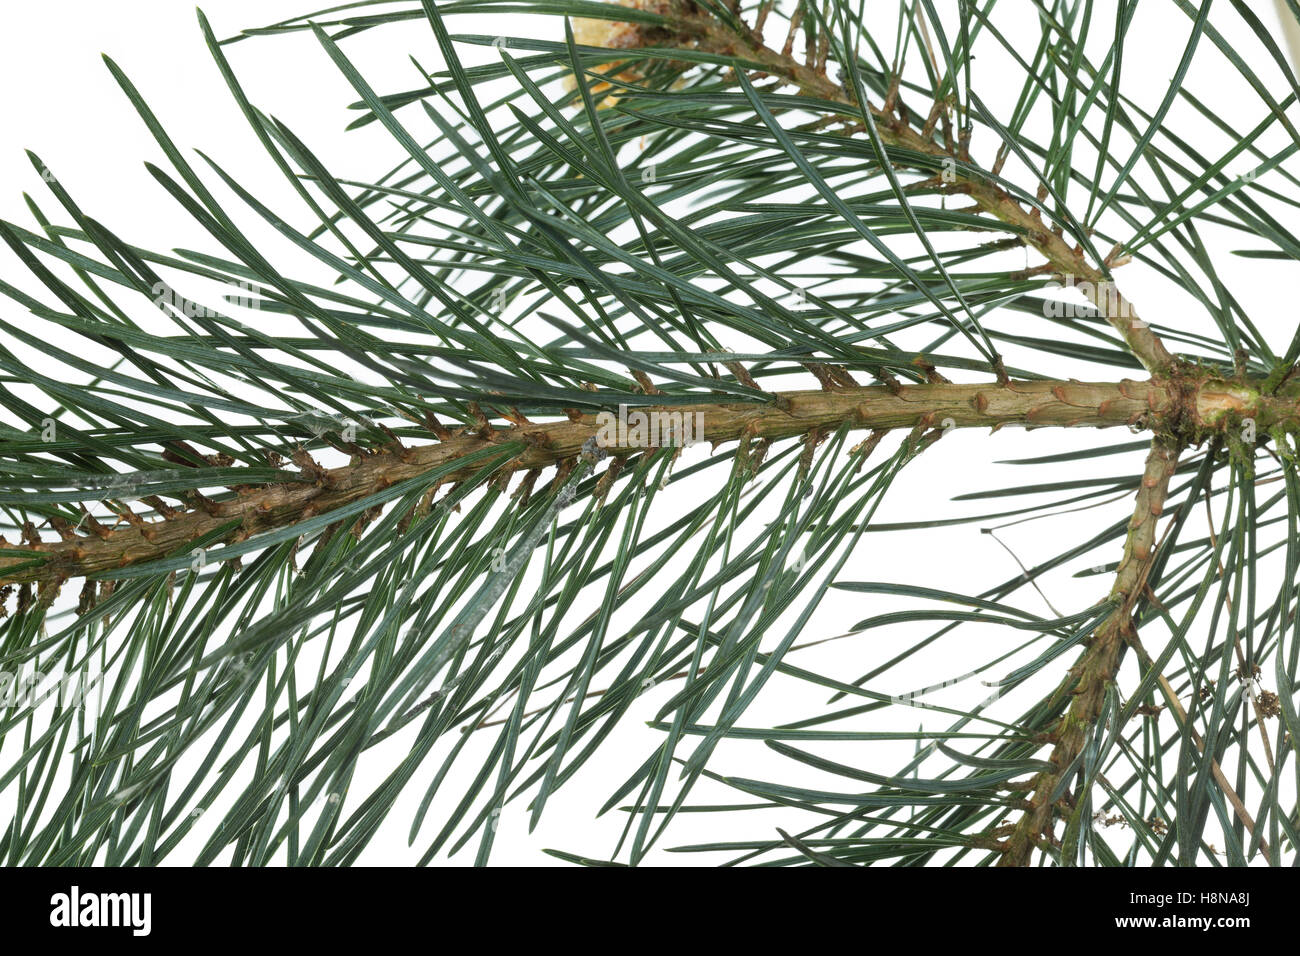 Wald-Kiefer, Waldkiefer, Gemeine Kiefer, Kiefern, Föhre, Pinus sylvestris, pino silvestre, Le Pin sylvestre Foto Stock